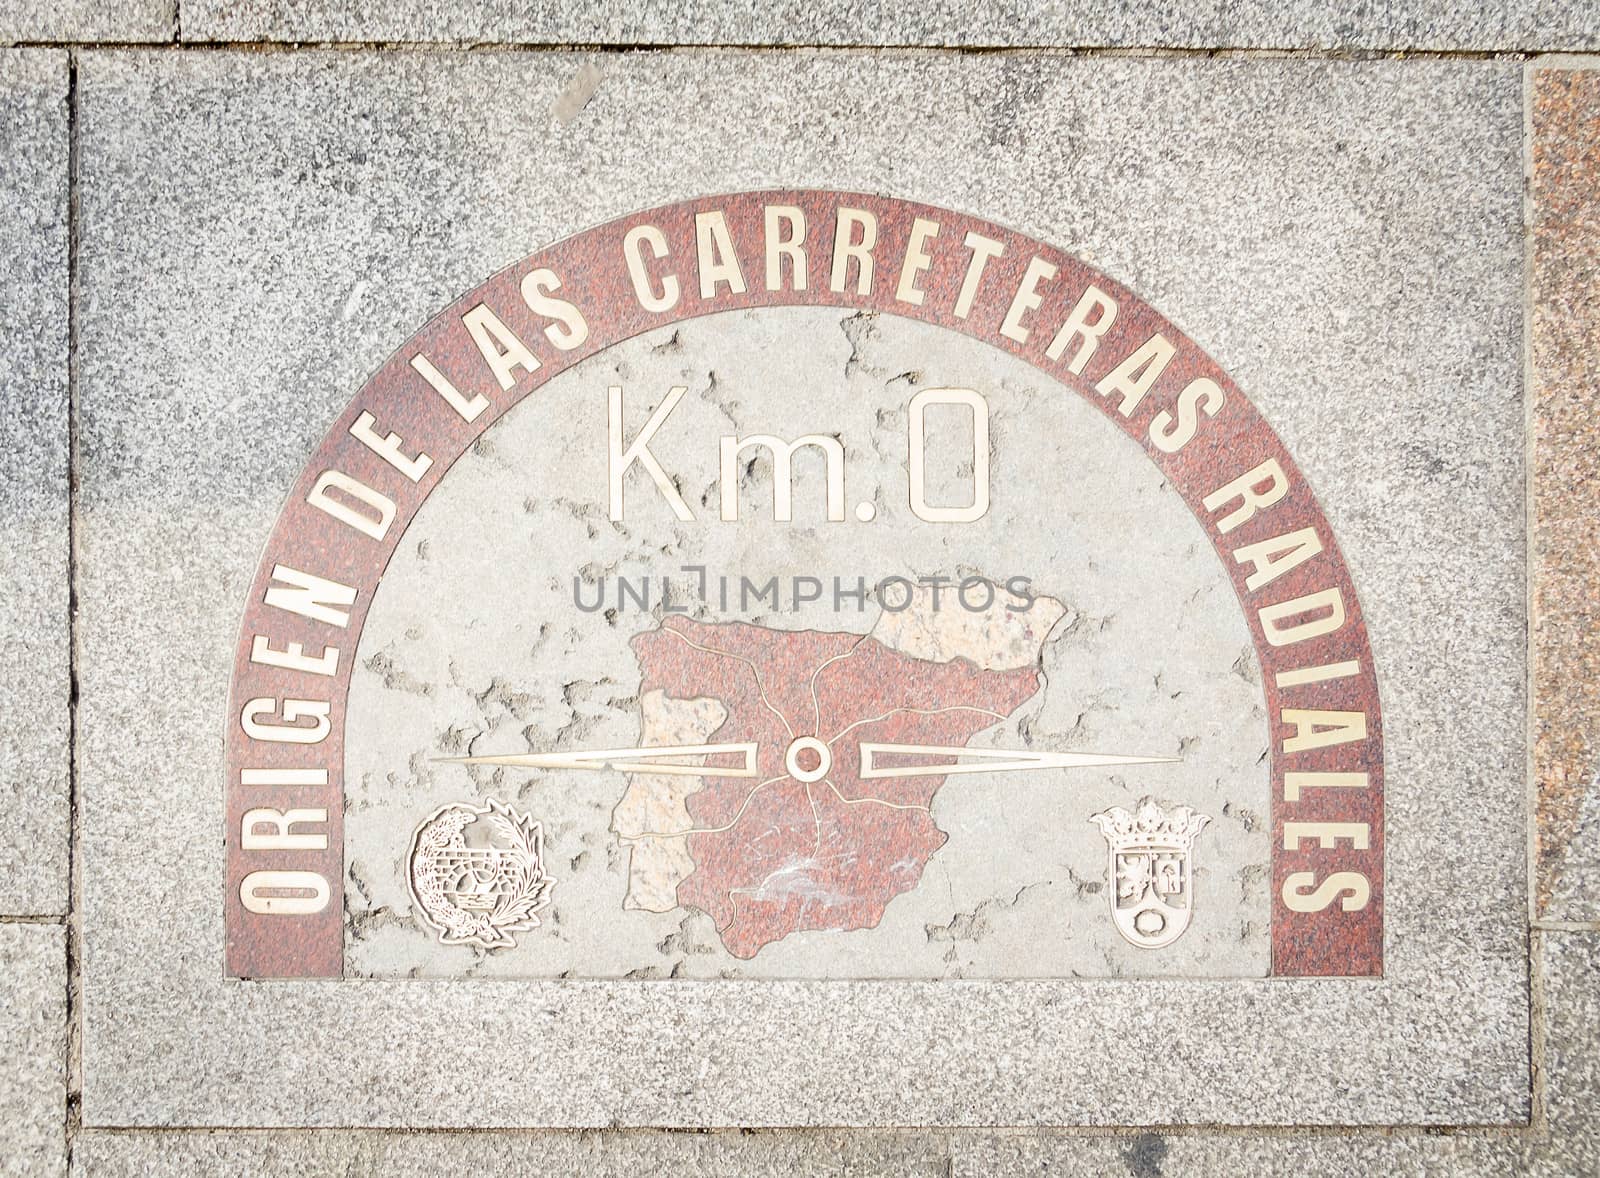 Kilometer zero point sign in Puerta del Sol Madrid by doble.d